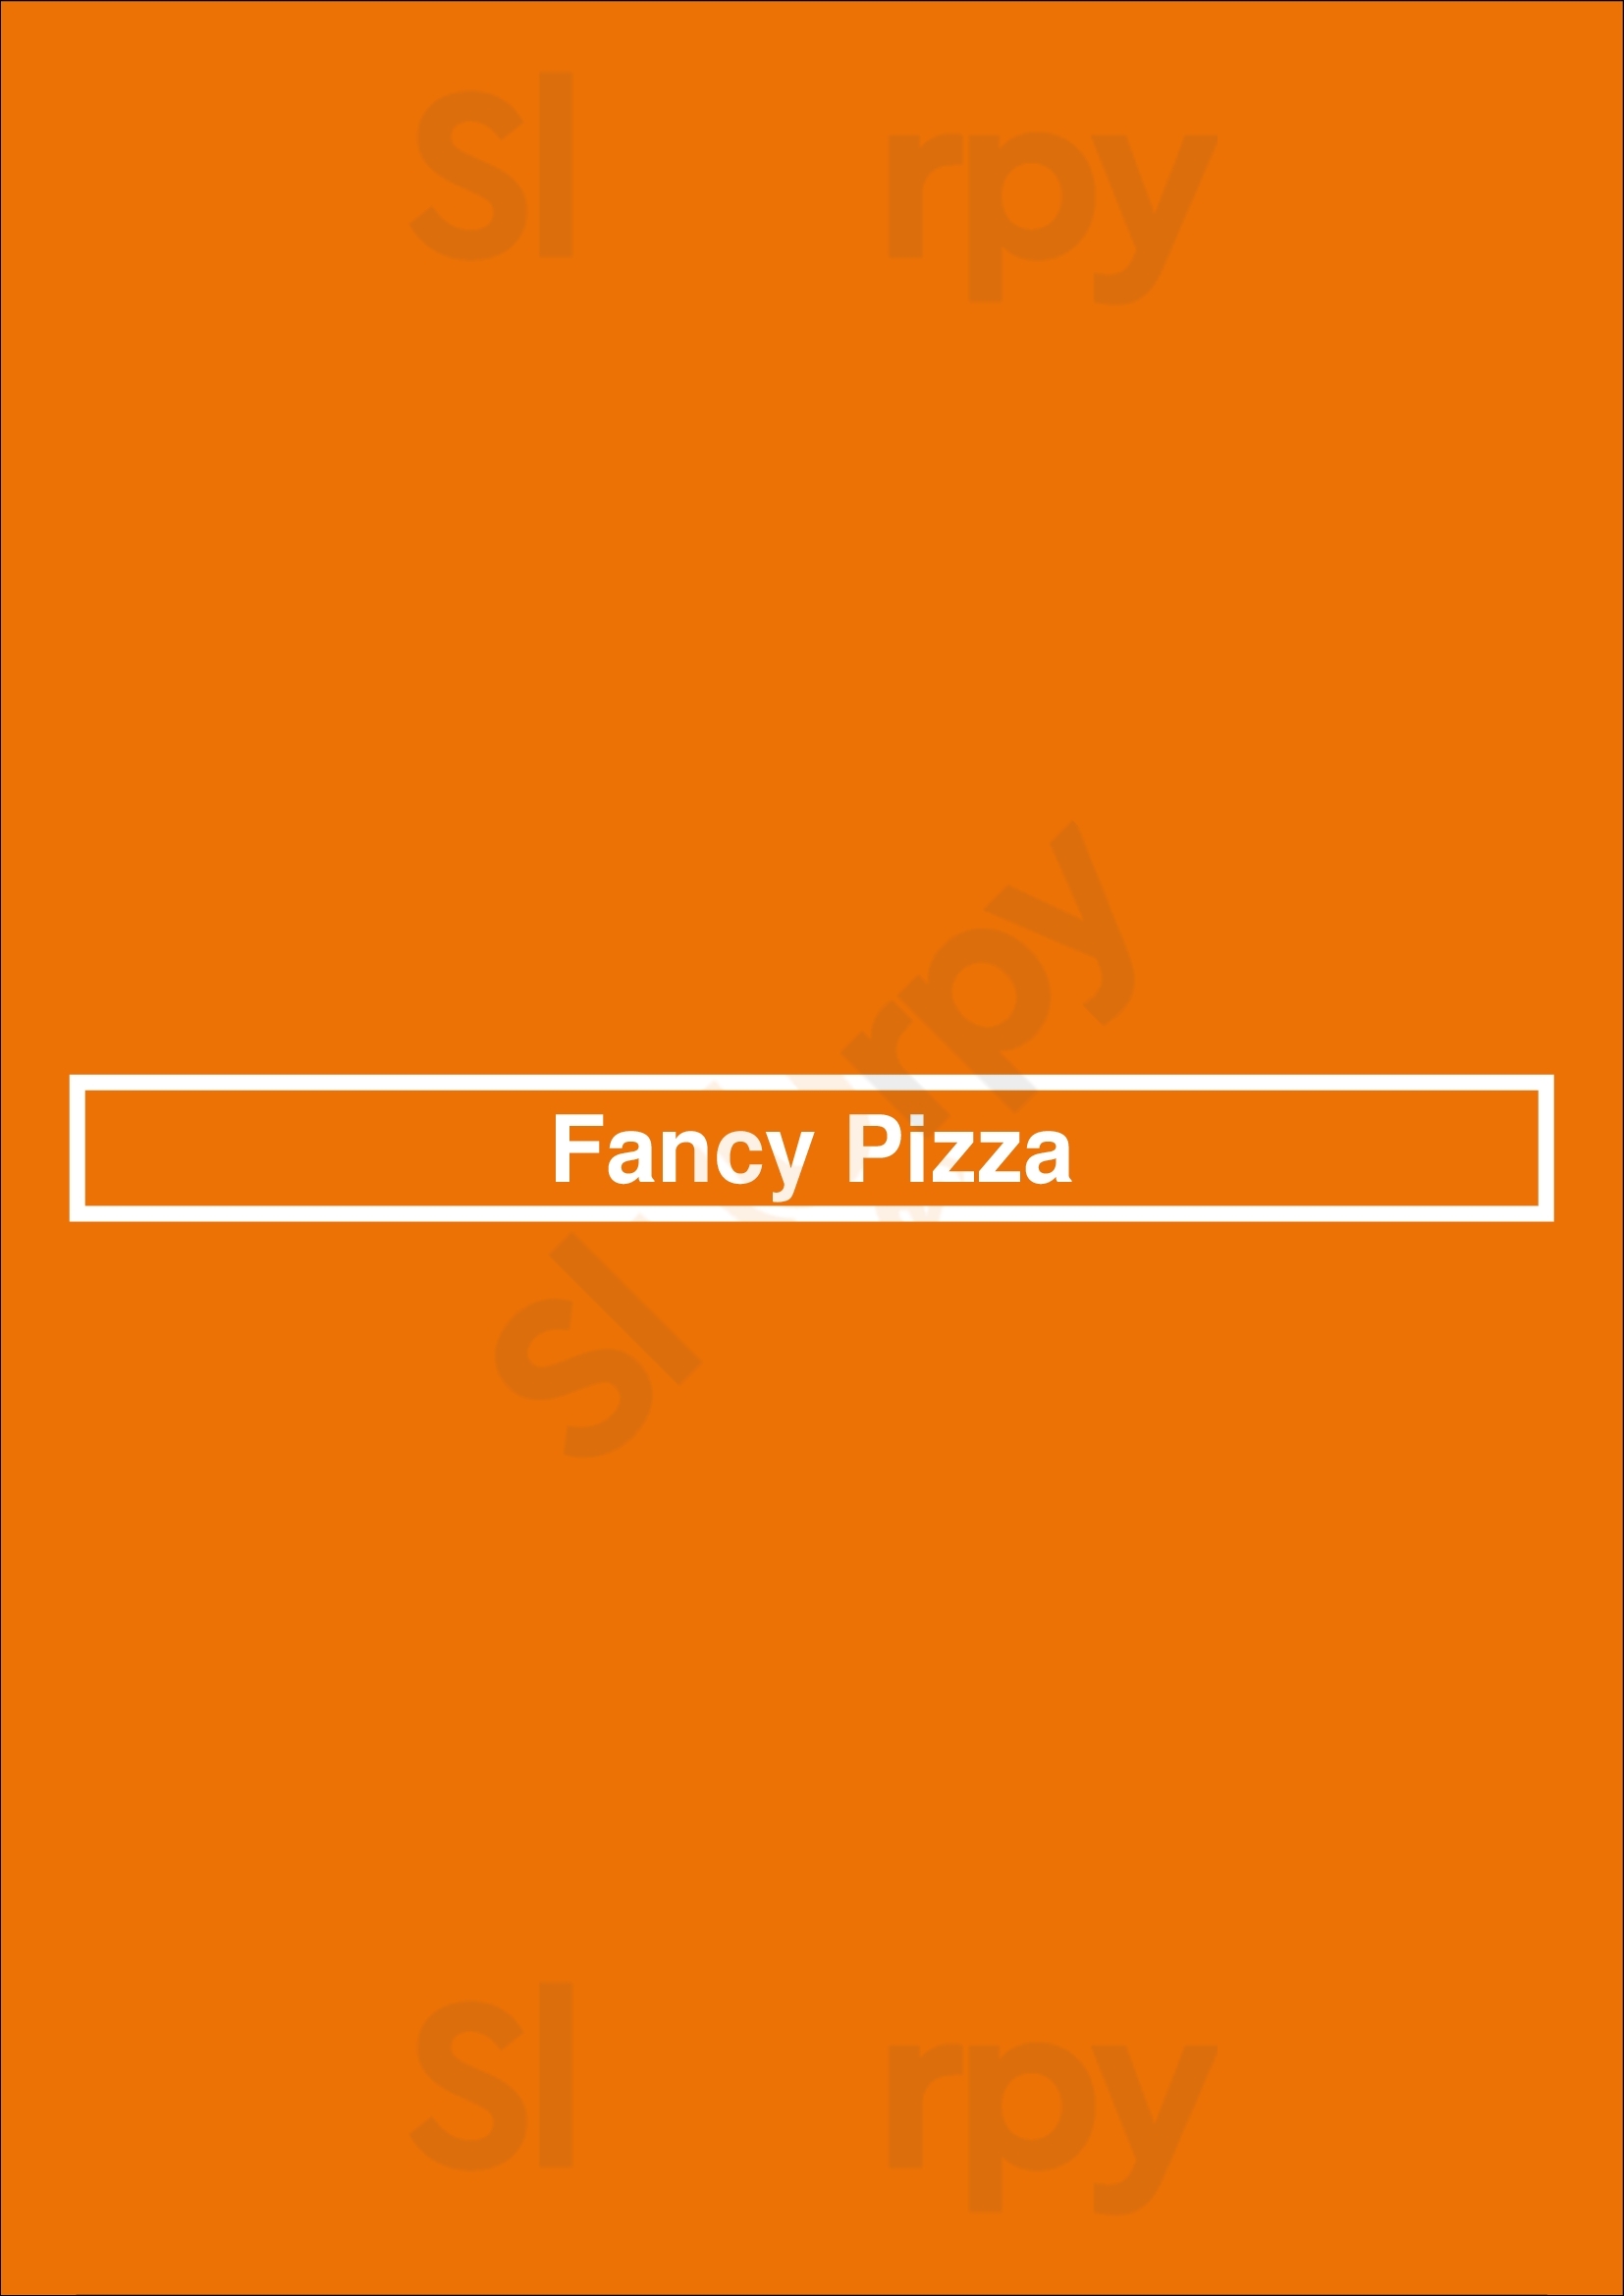 Fancy Pizza Cardiff Menu - 1